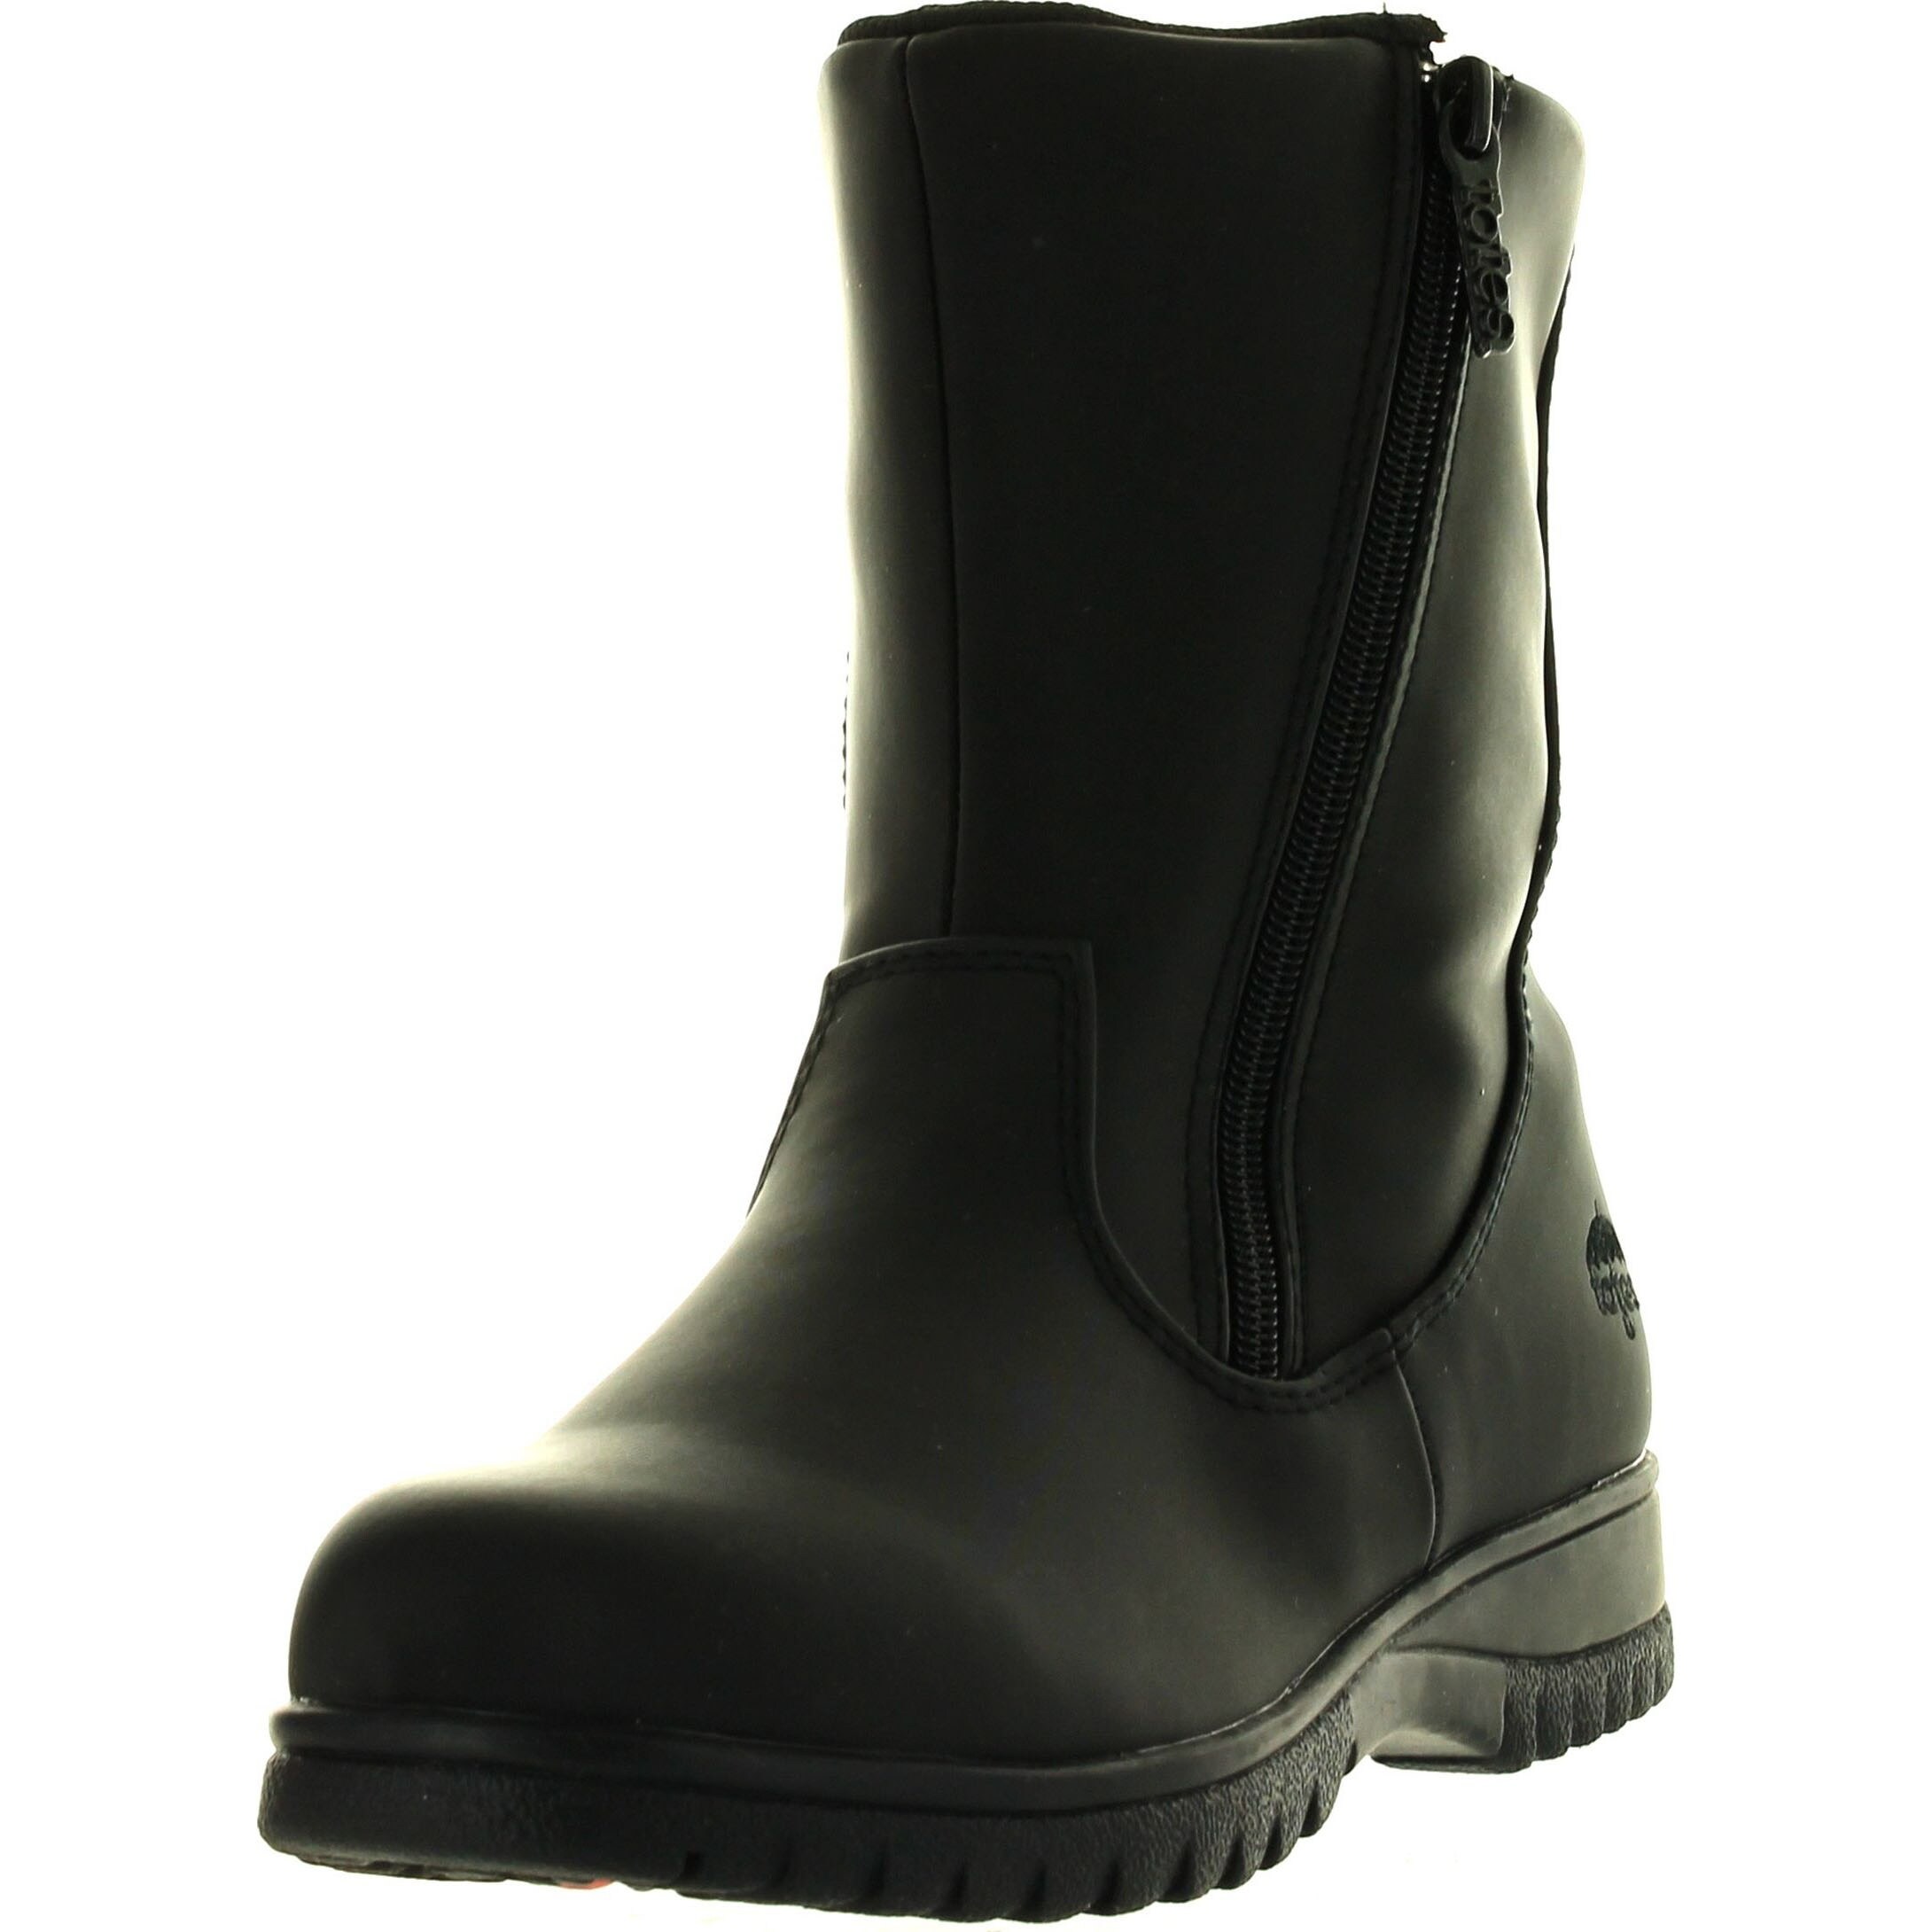 black waterproof snow boots